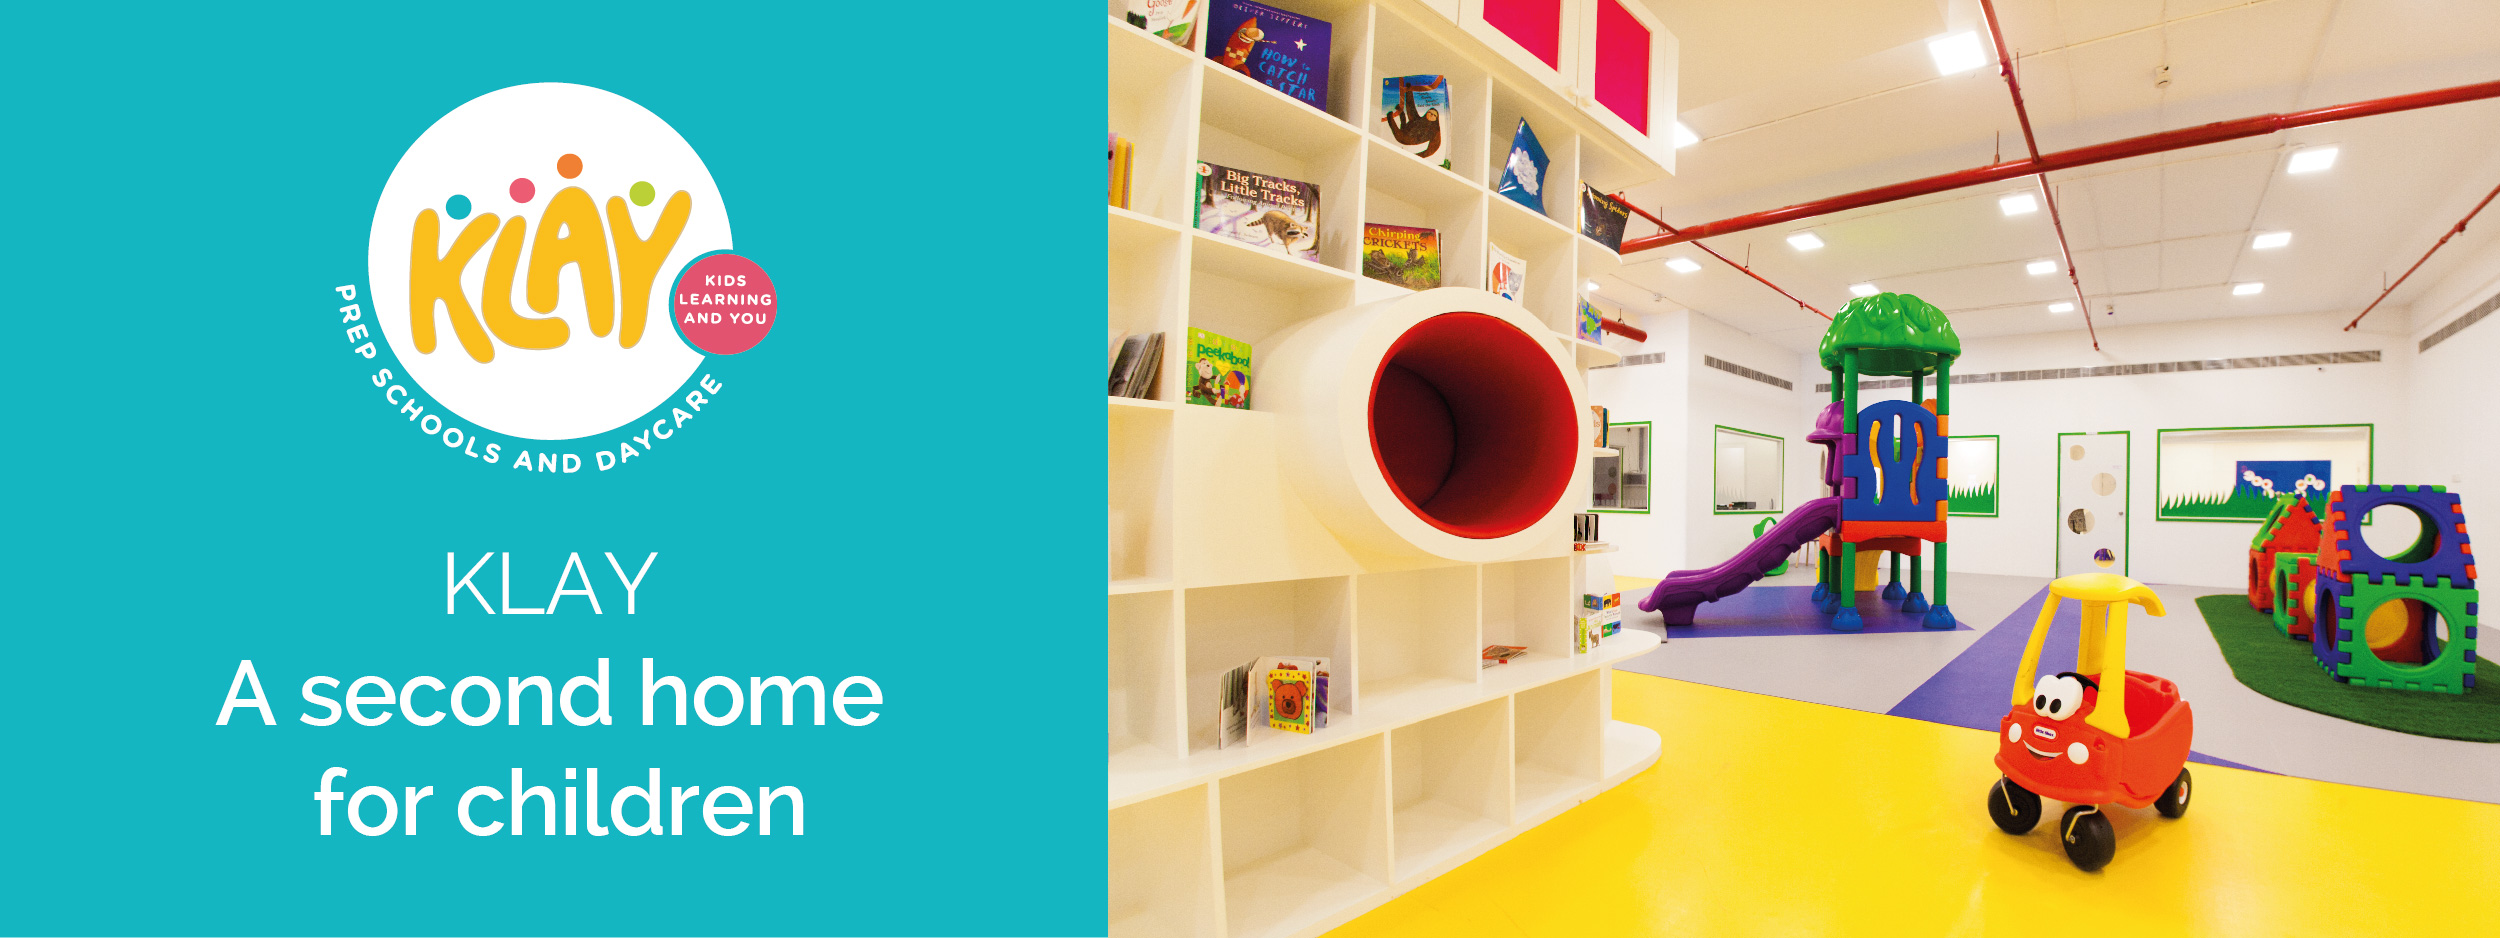 preschool daycare second home for children